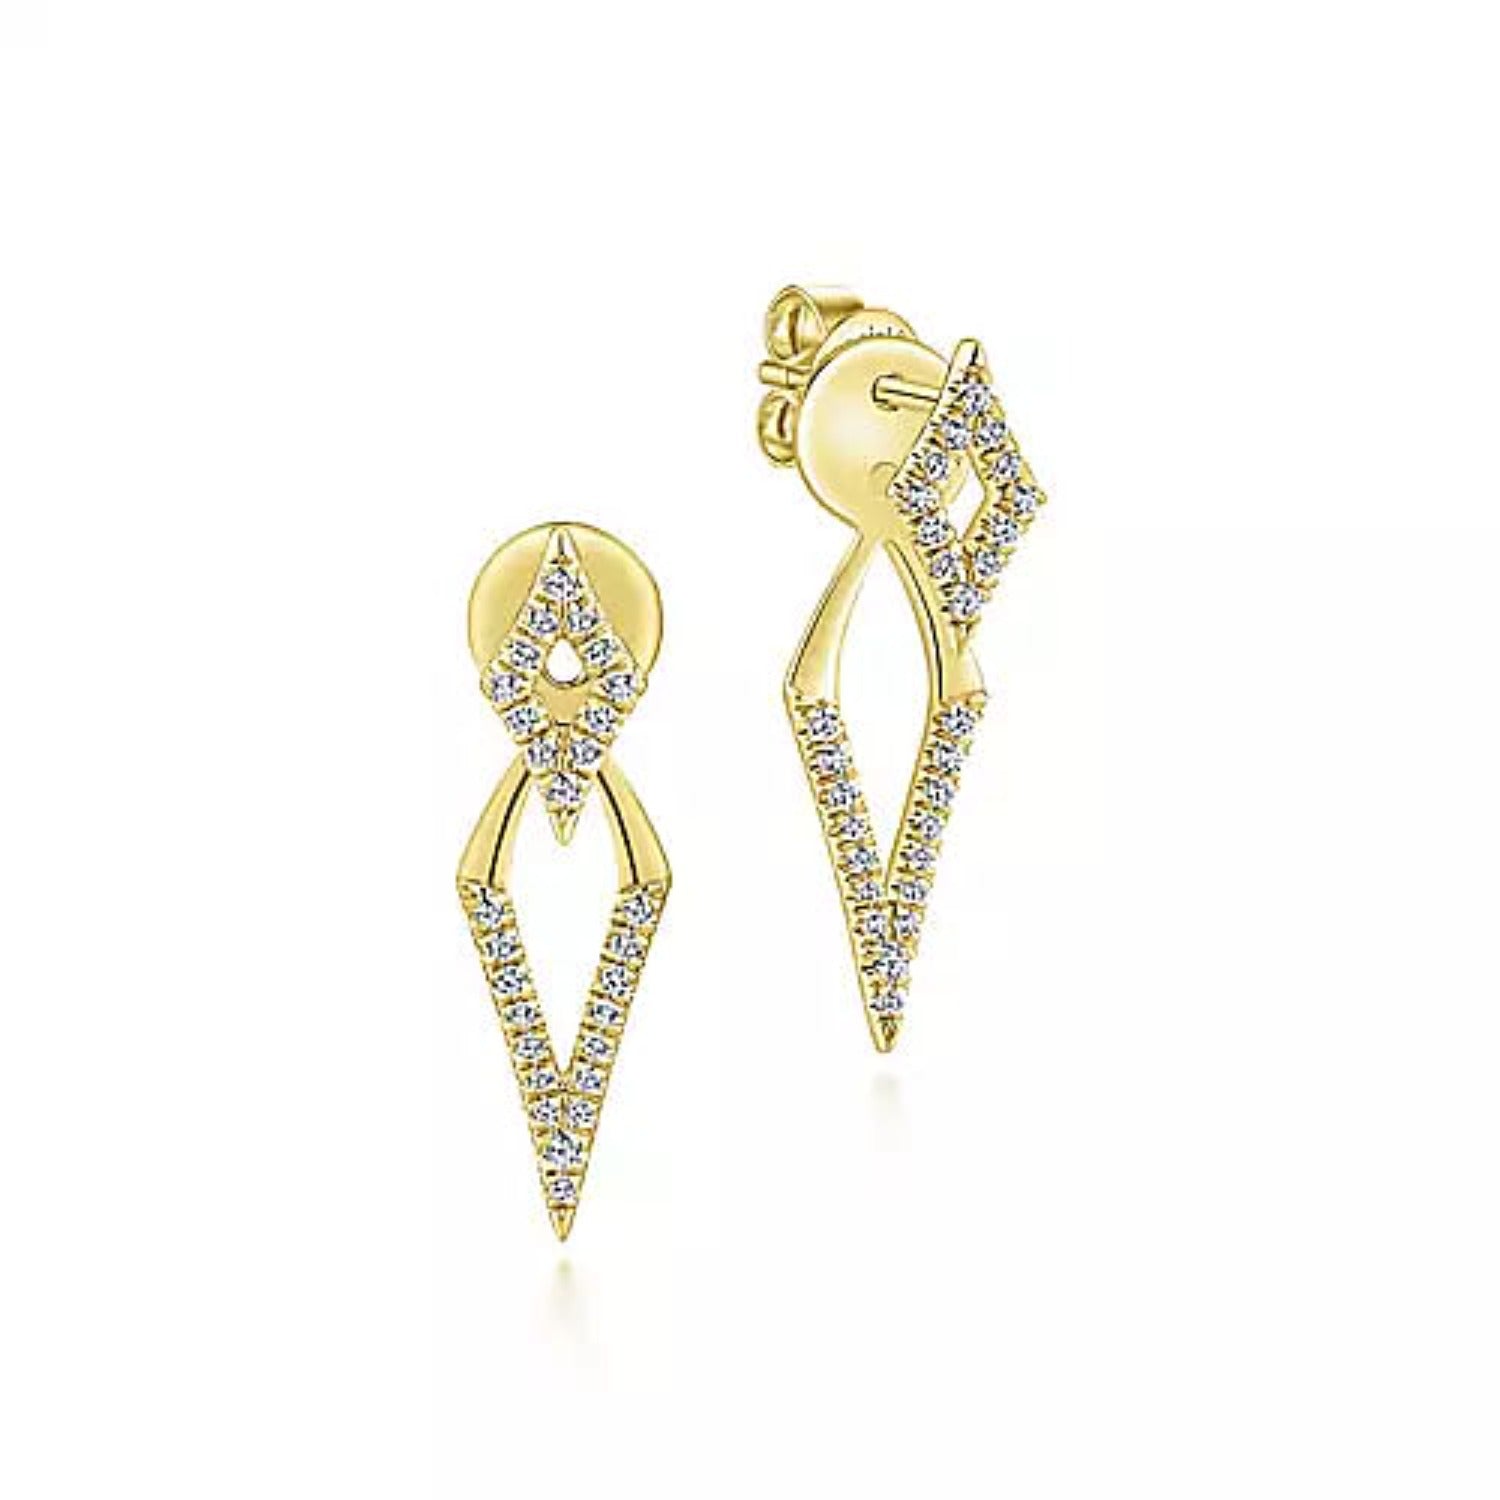 Buy Hyderabadi Studs Online| 22k Gold Earrings with Precious Stones